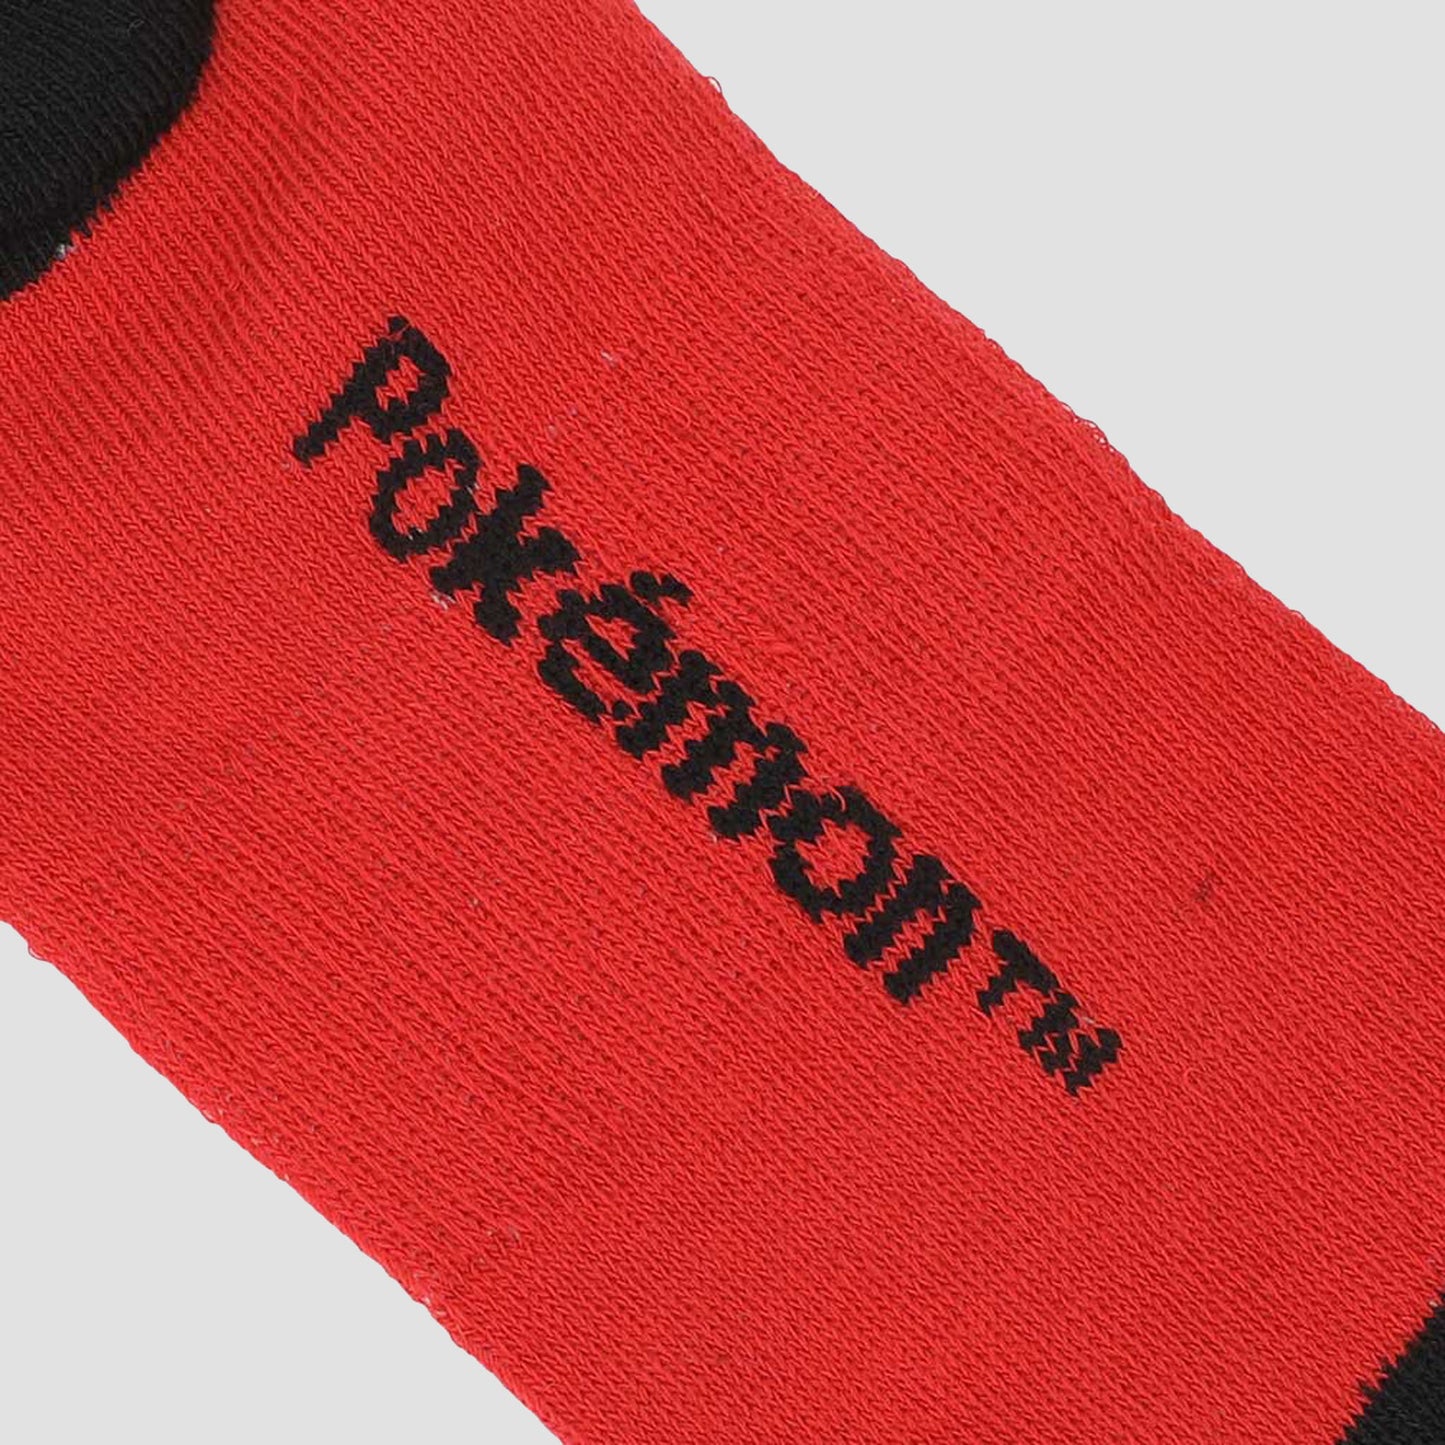 Pikachu (Pokemon) Character Crew Socks